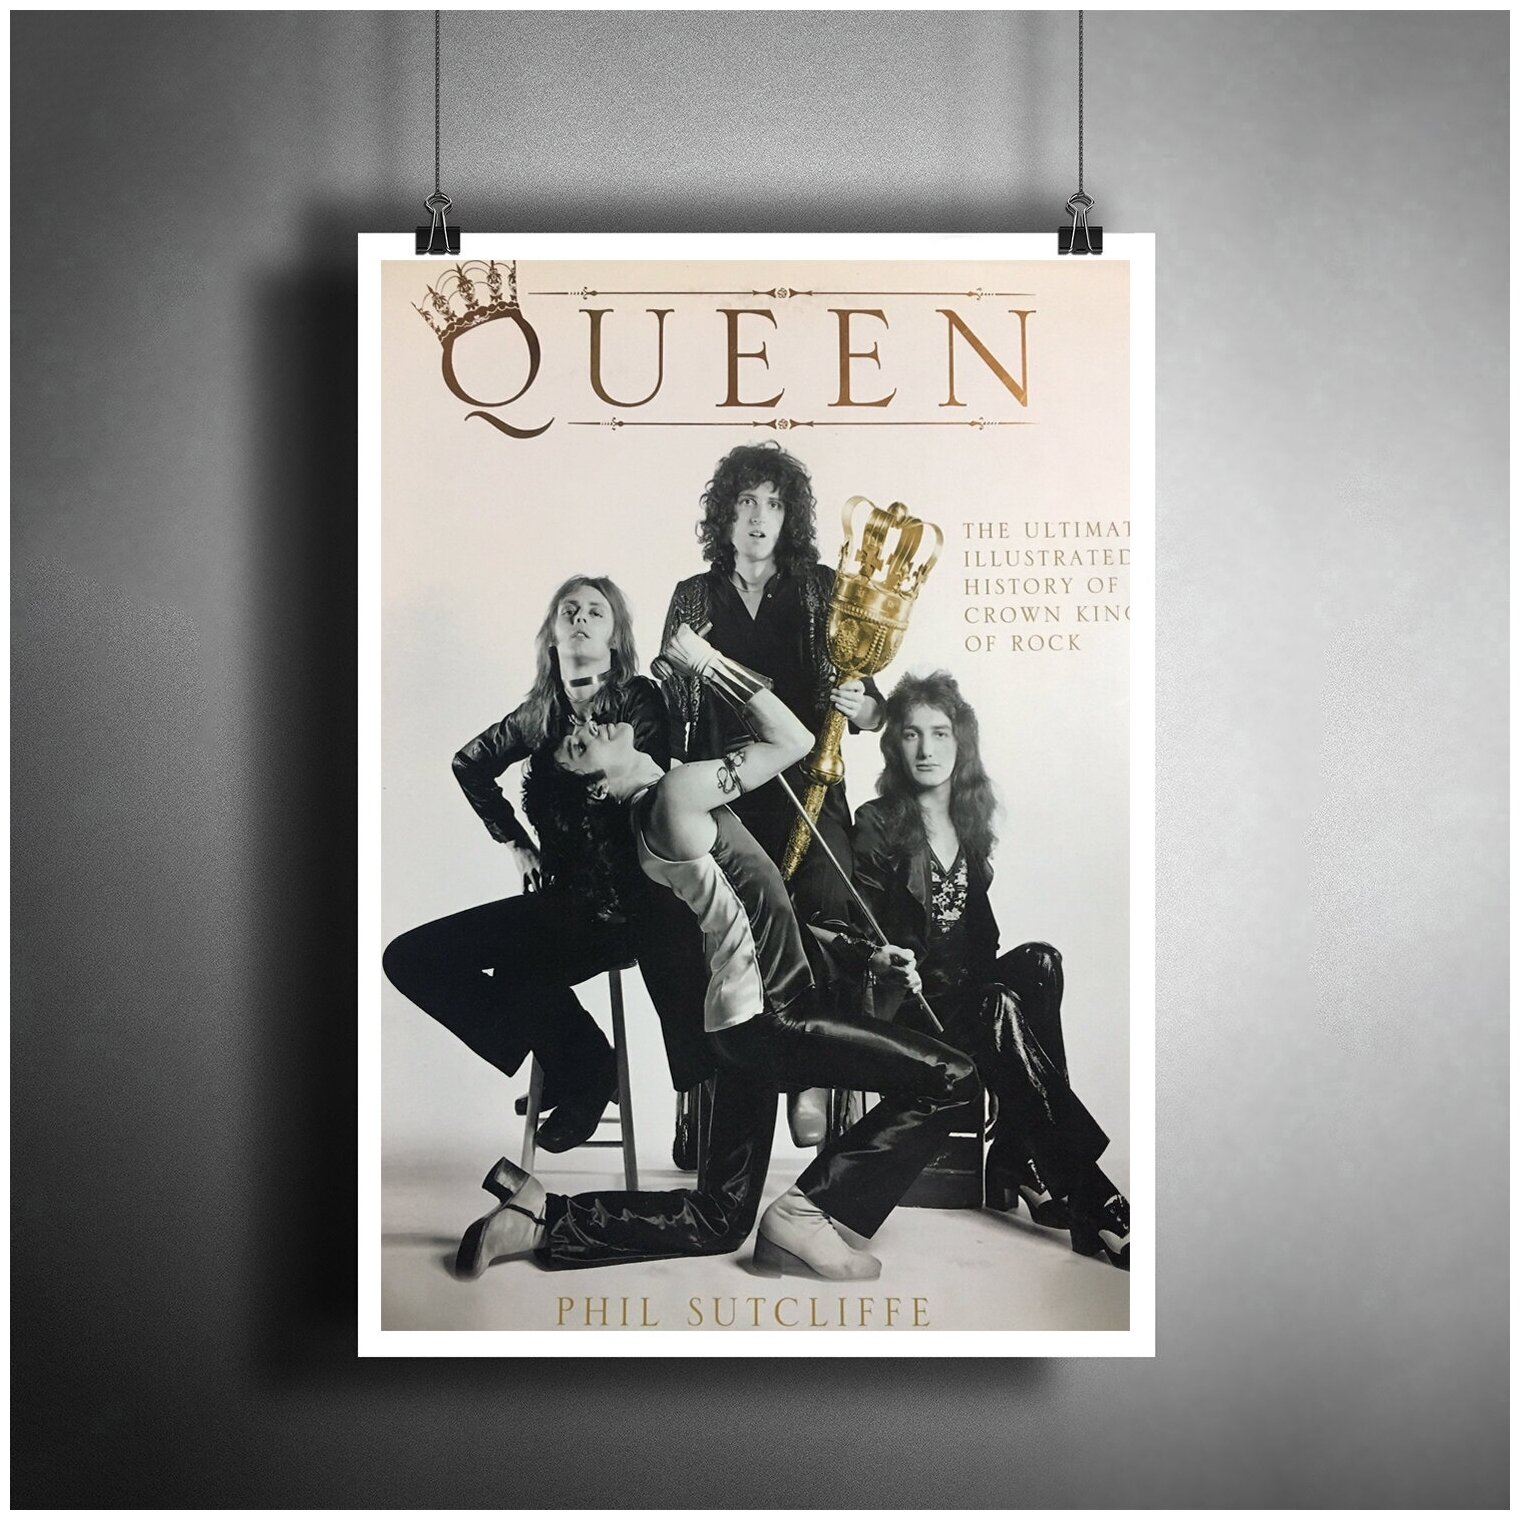 Постер плакат для интерьера "Музыка: Британская рок-группа The Queen (Куин). Фредди Меркьюри" / Декор дома, офиса, комнаты, квартиры A3 (297 x 420 мм)